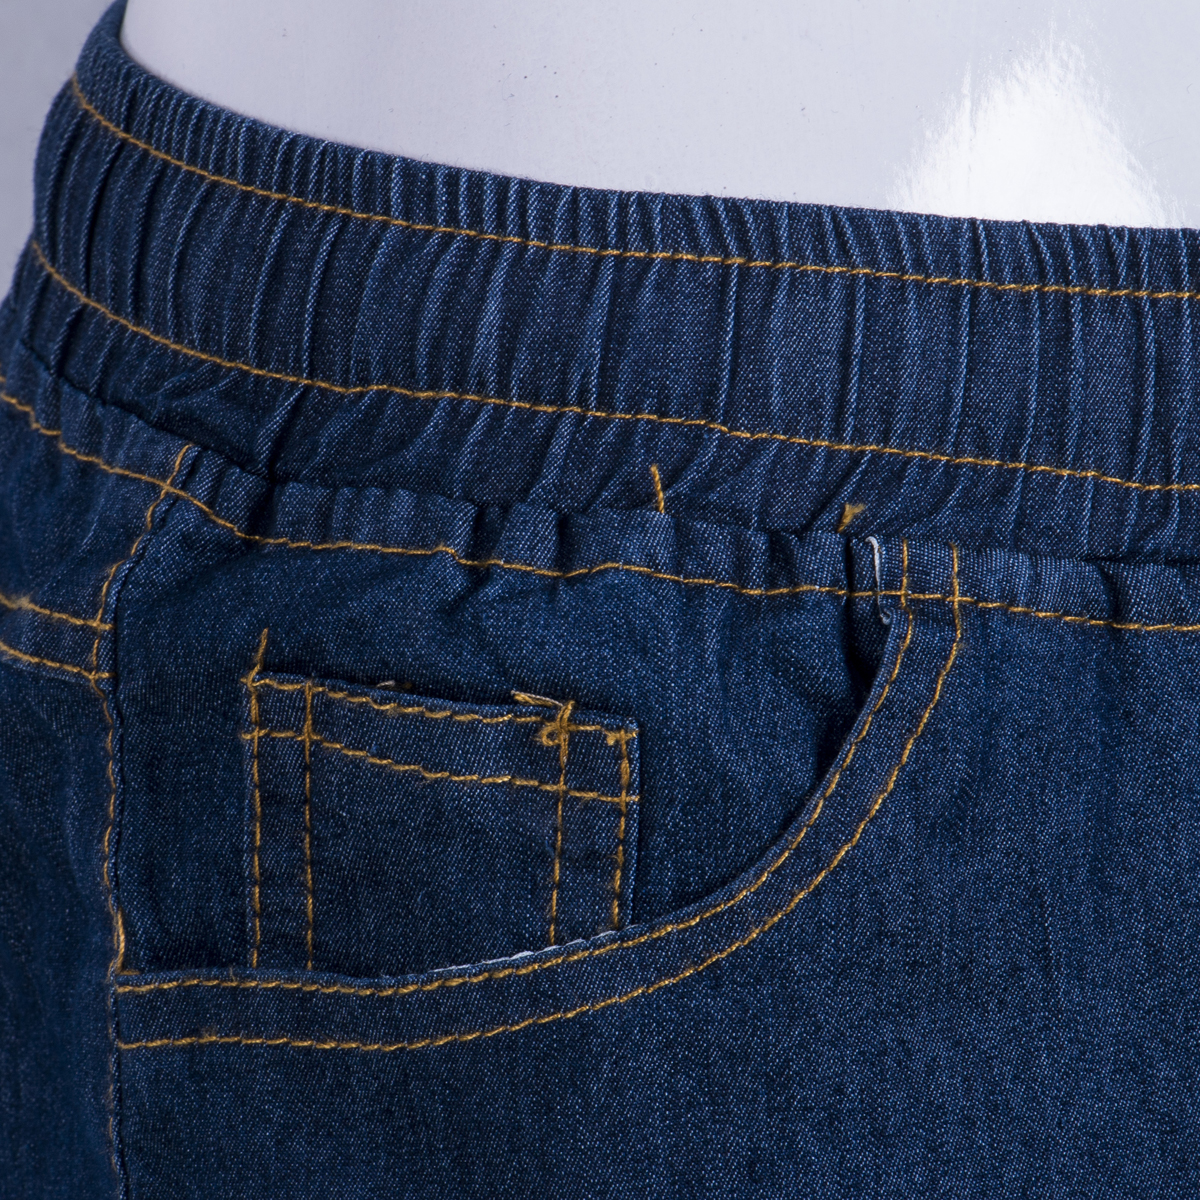 Puloru New Fashion Women Denim Skinny Cut Pencil Pants High Waist Stretch Jeans Trousers Slim drawstring bloomers jeans - image 5 of 5